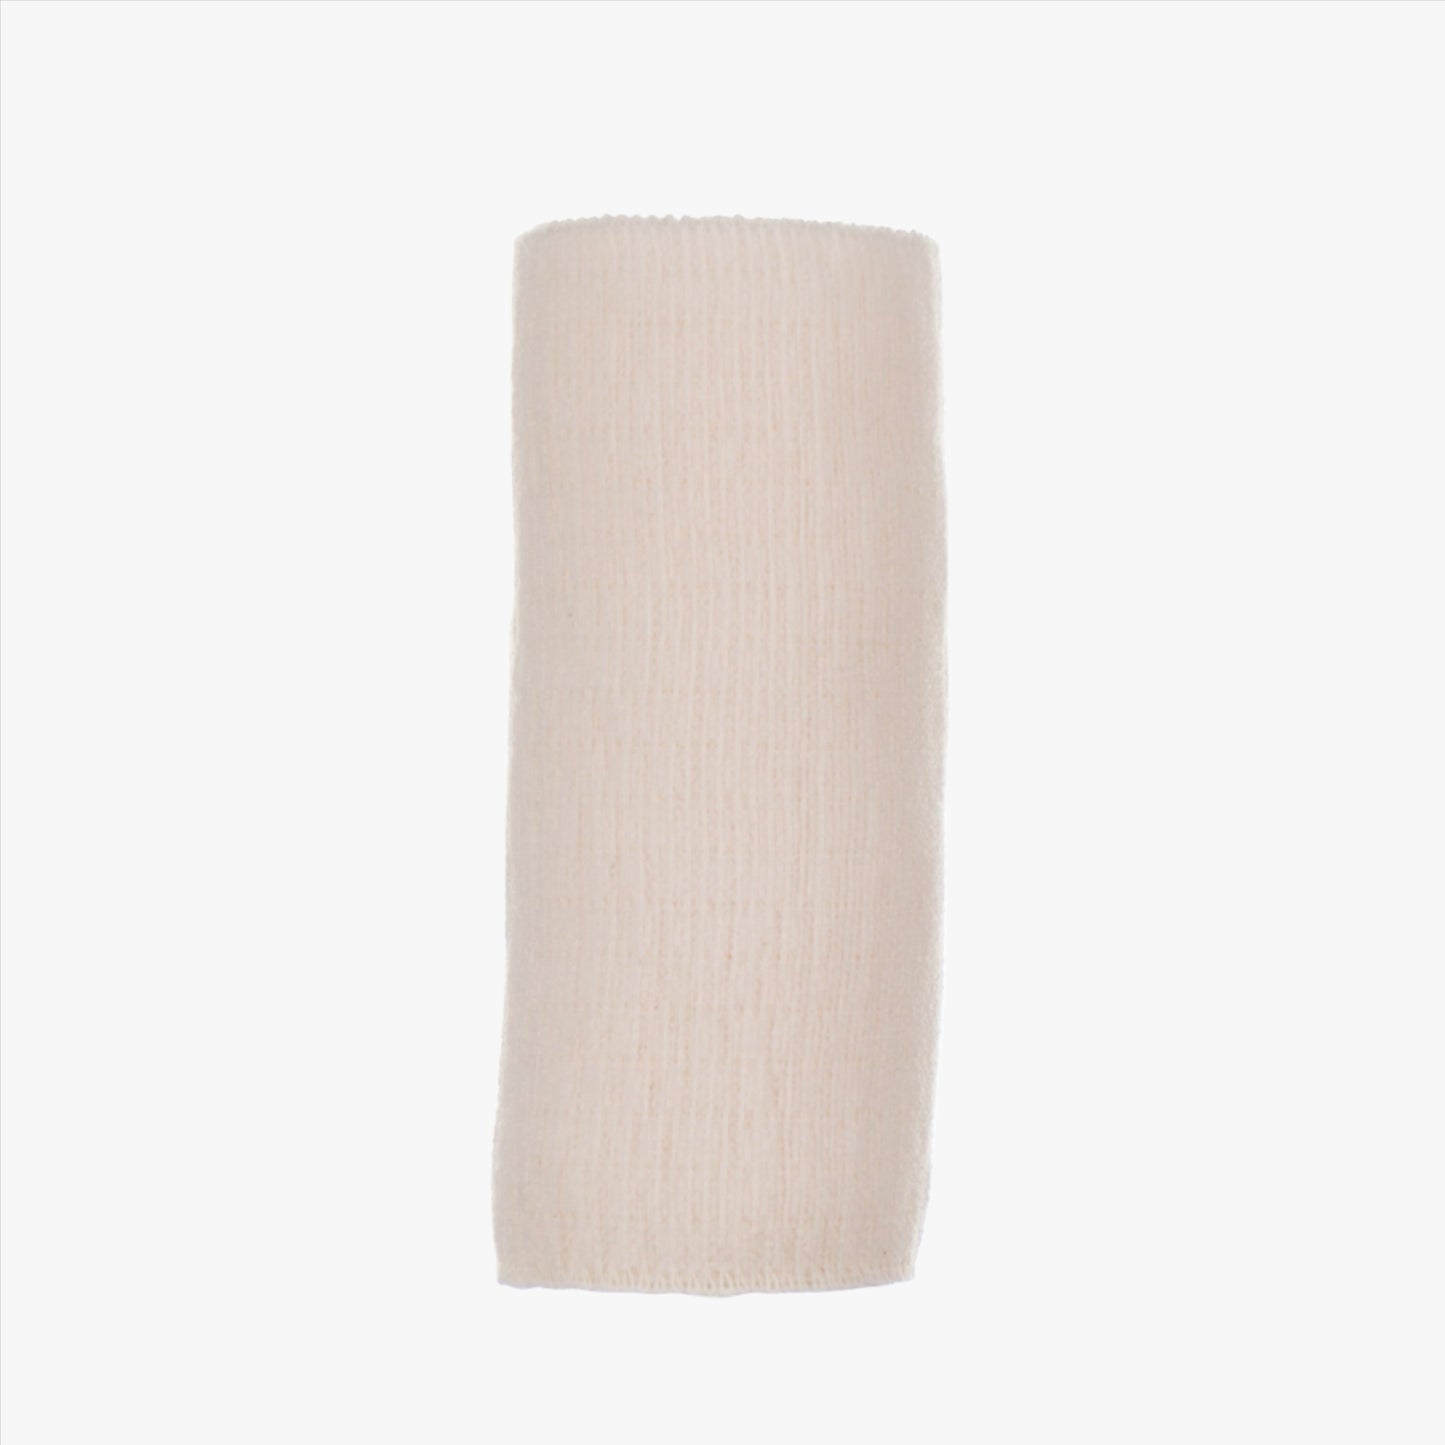 Vitri Elastic Support Bandage 10 cm x 4 m